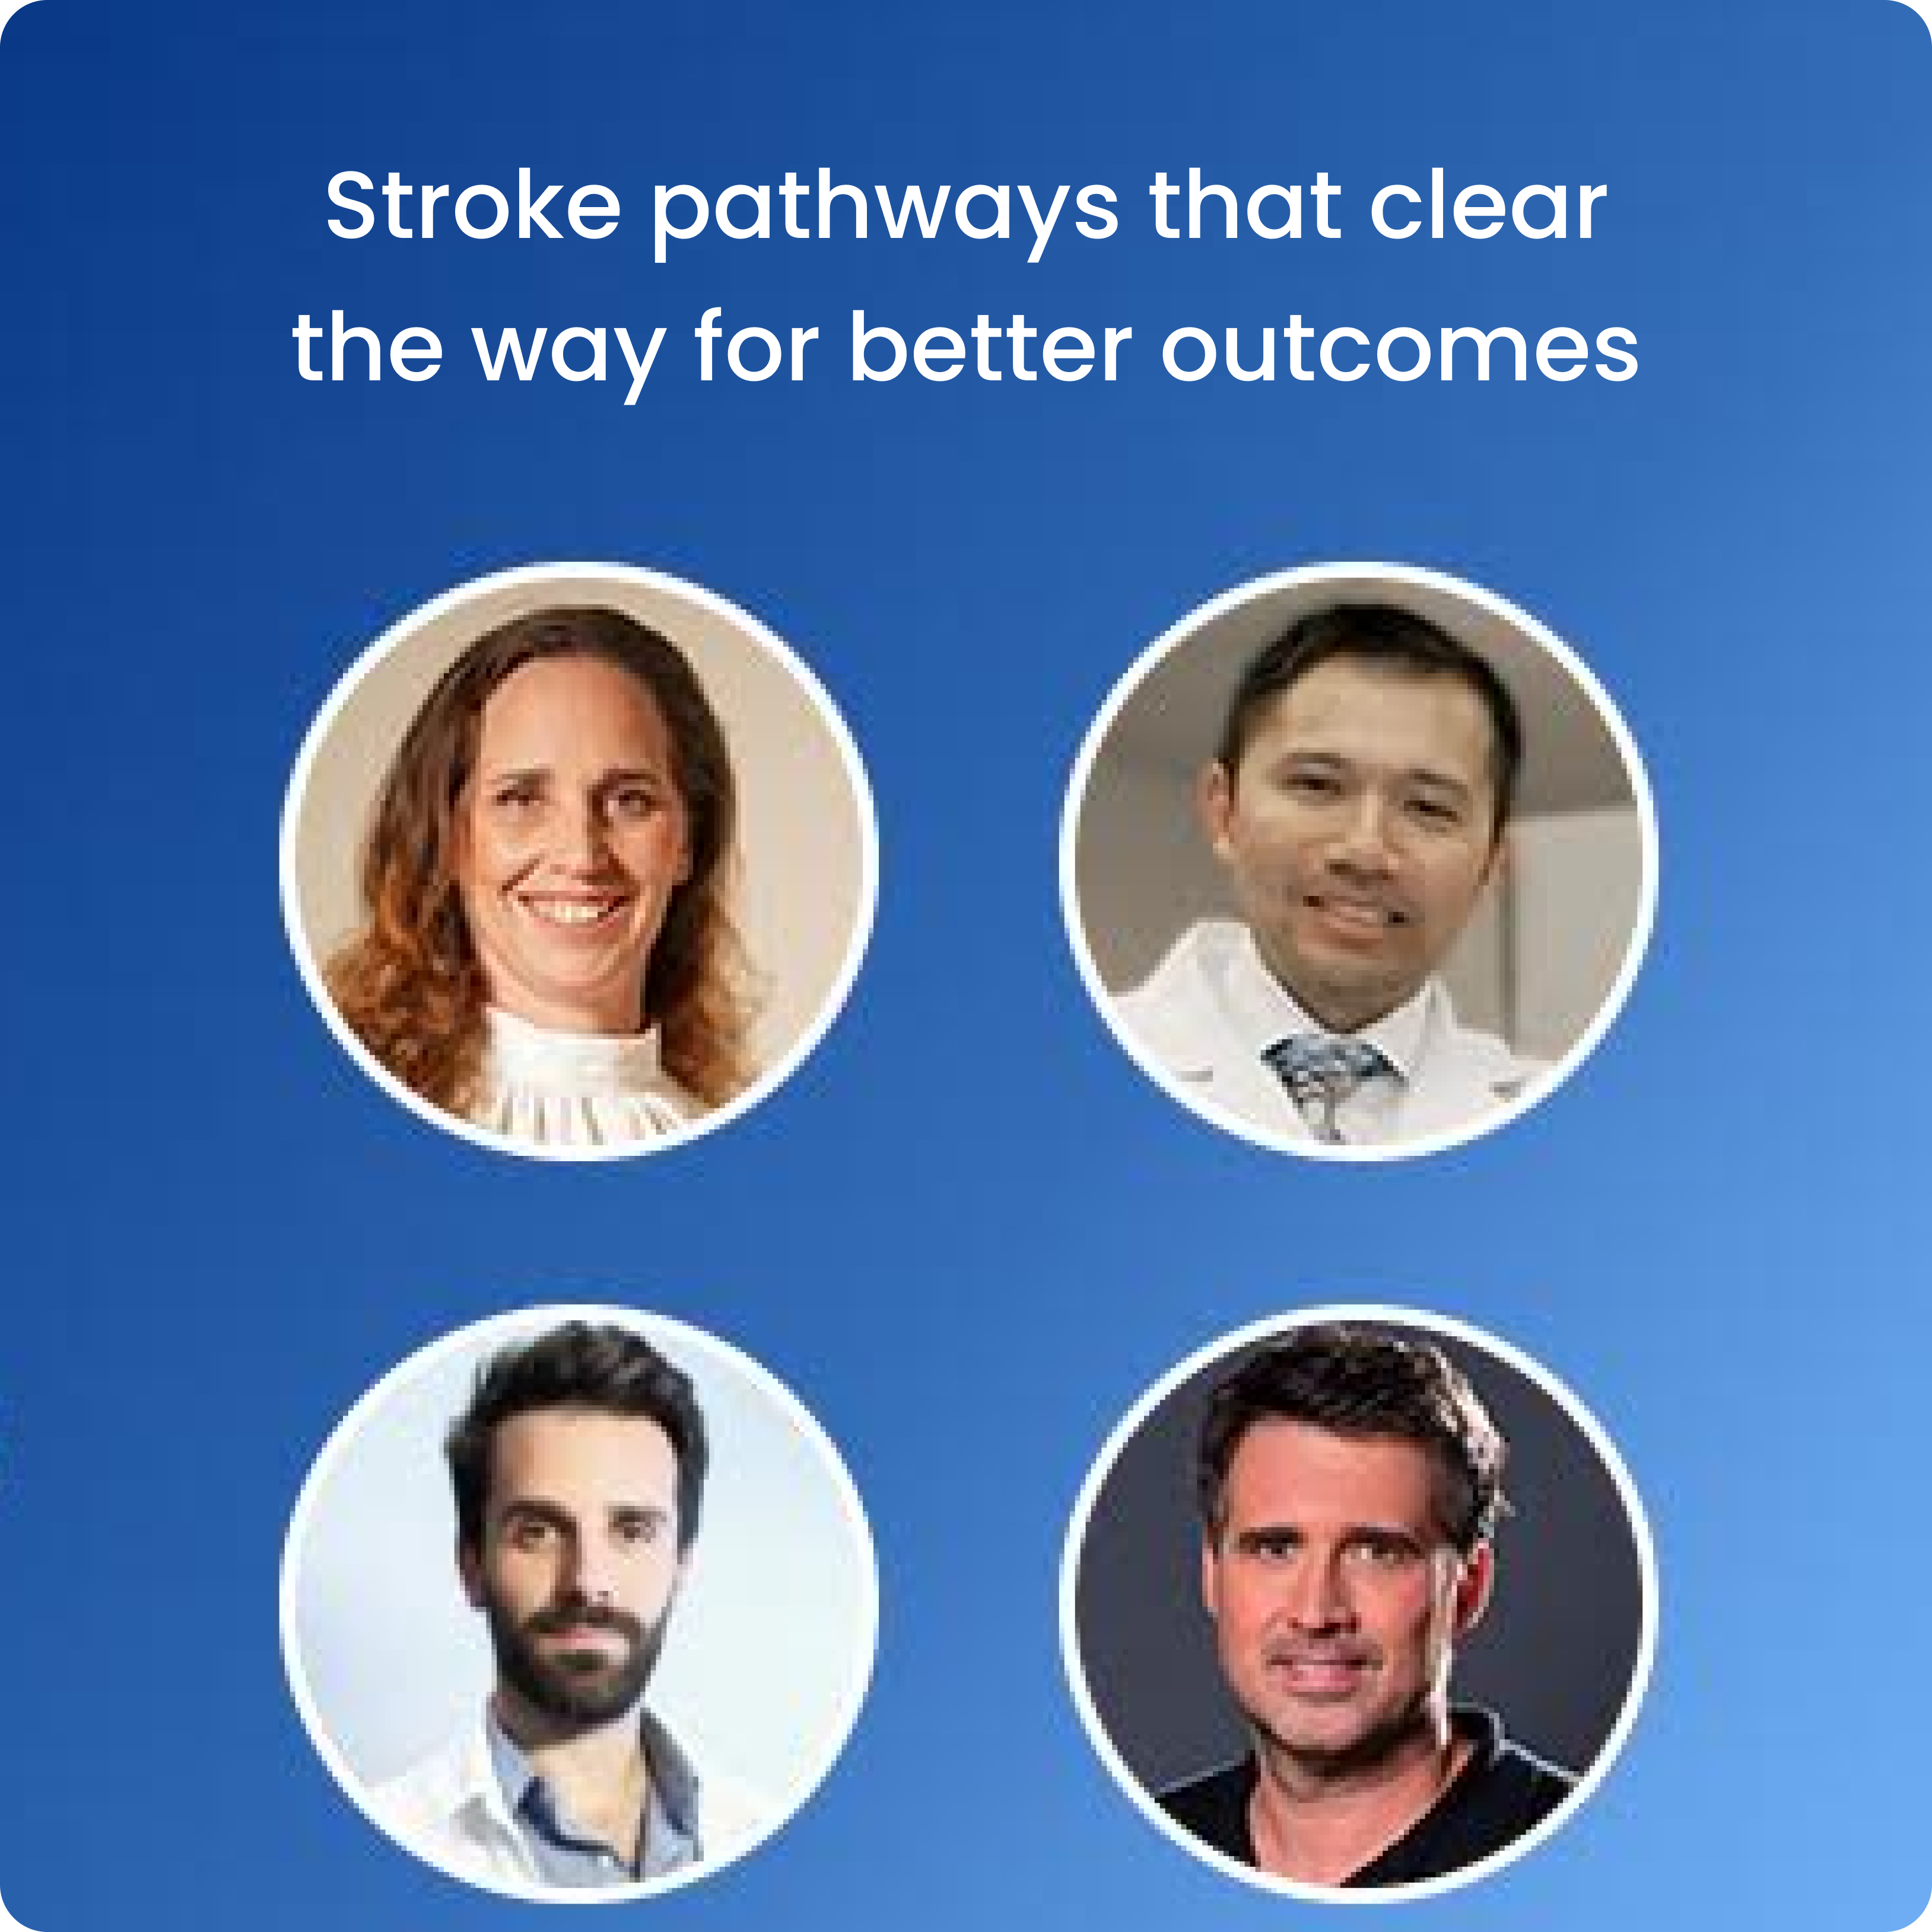 The future of stroke treatment